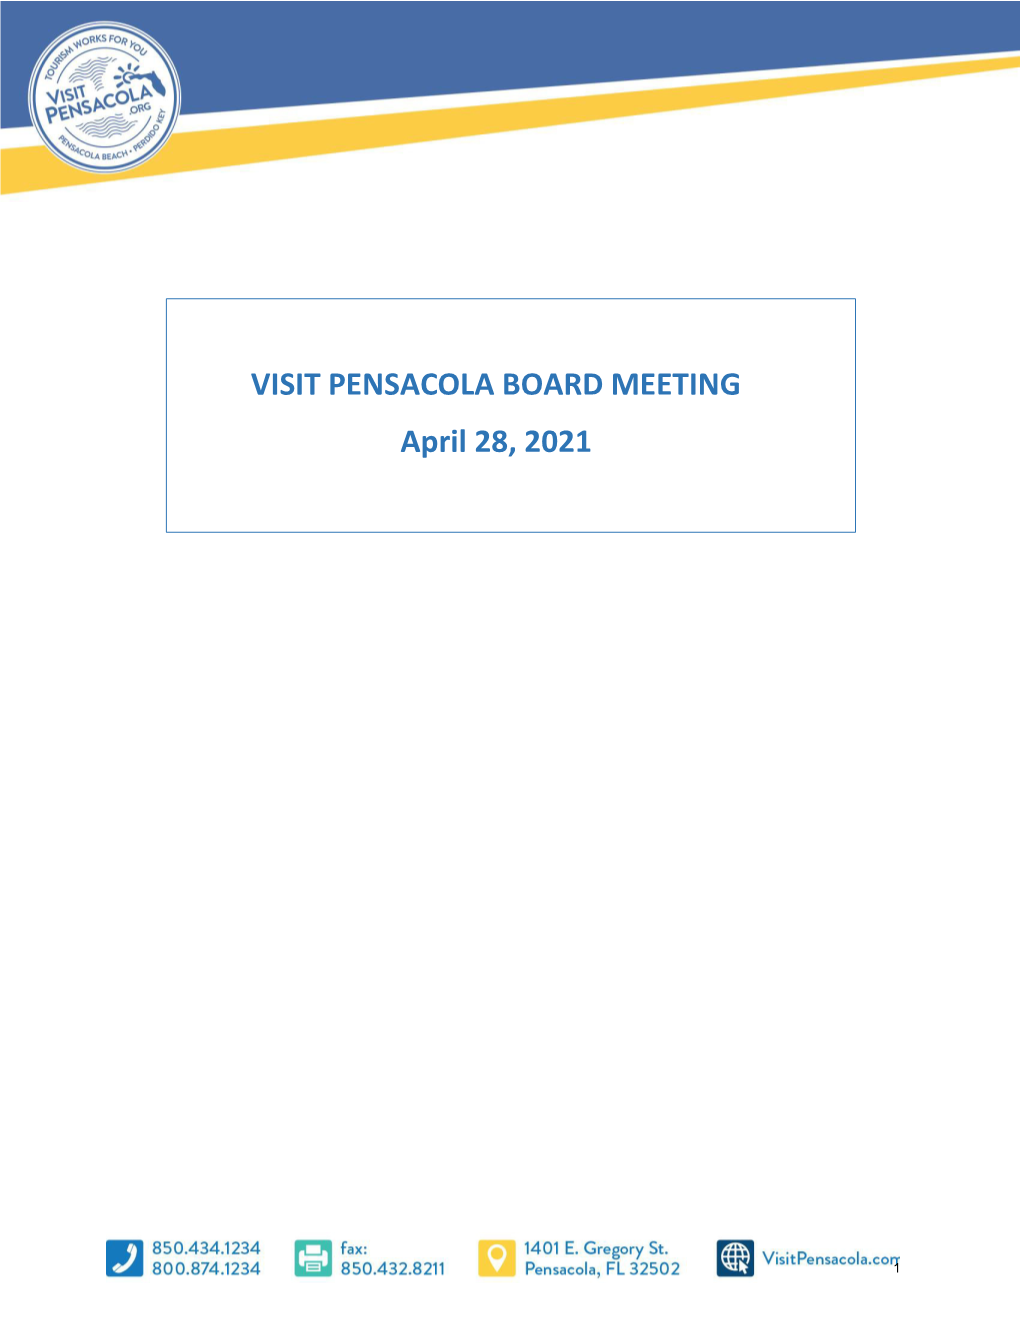 VISIT PENSACOLA BOARD MEETING April 28, 2021